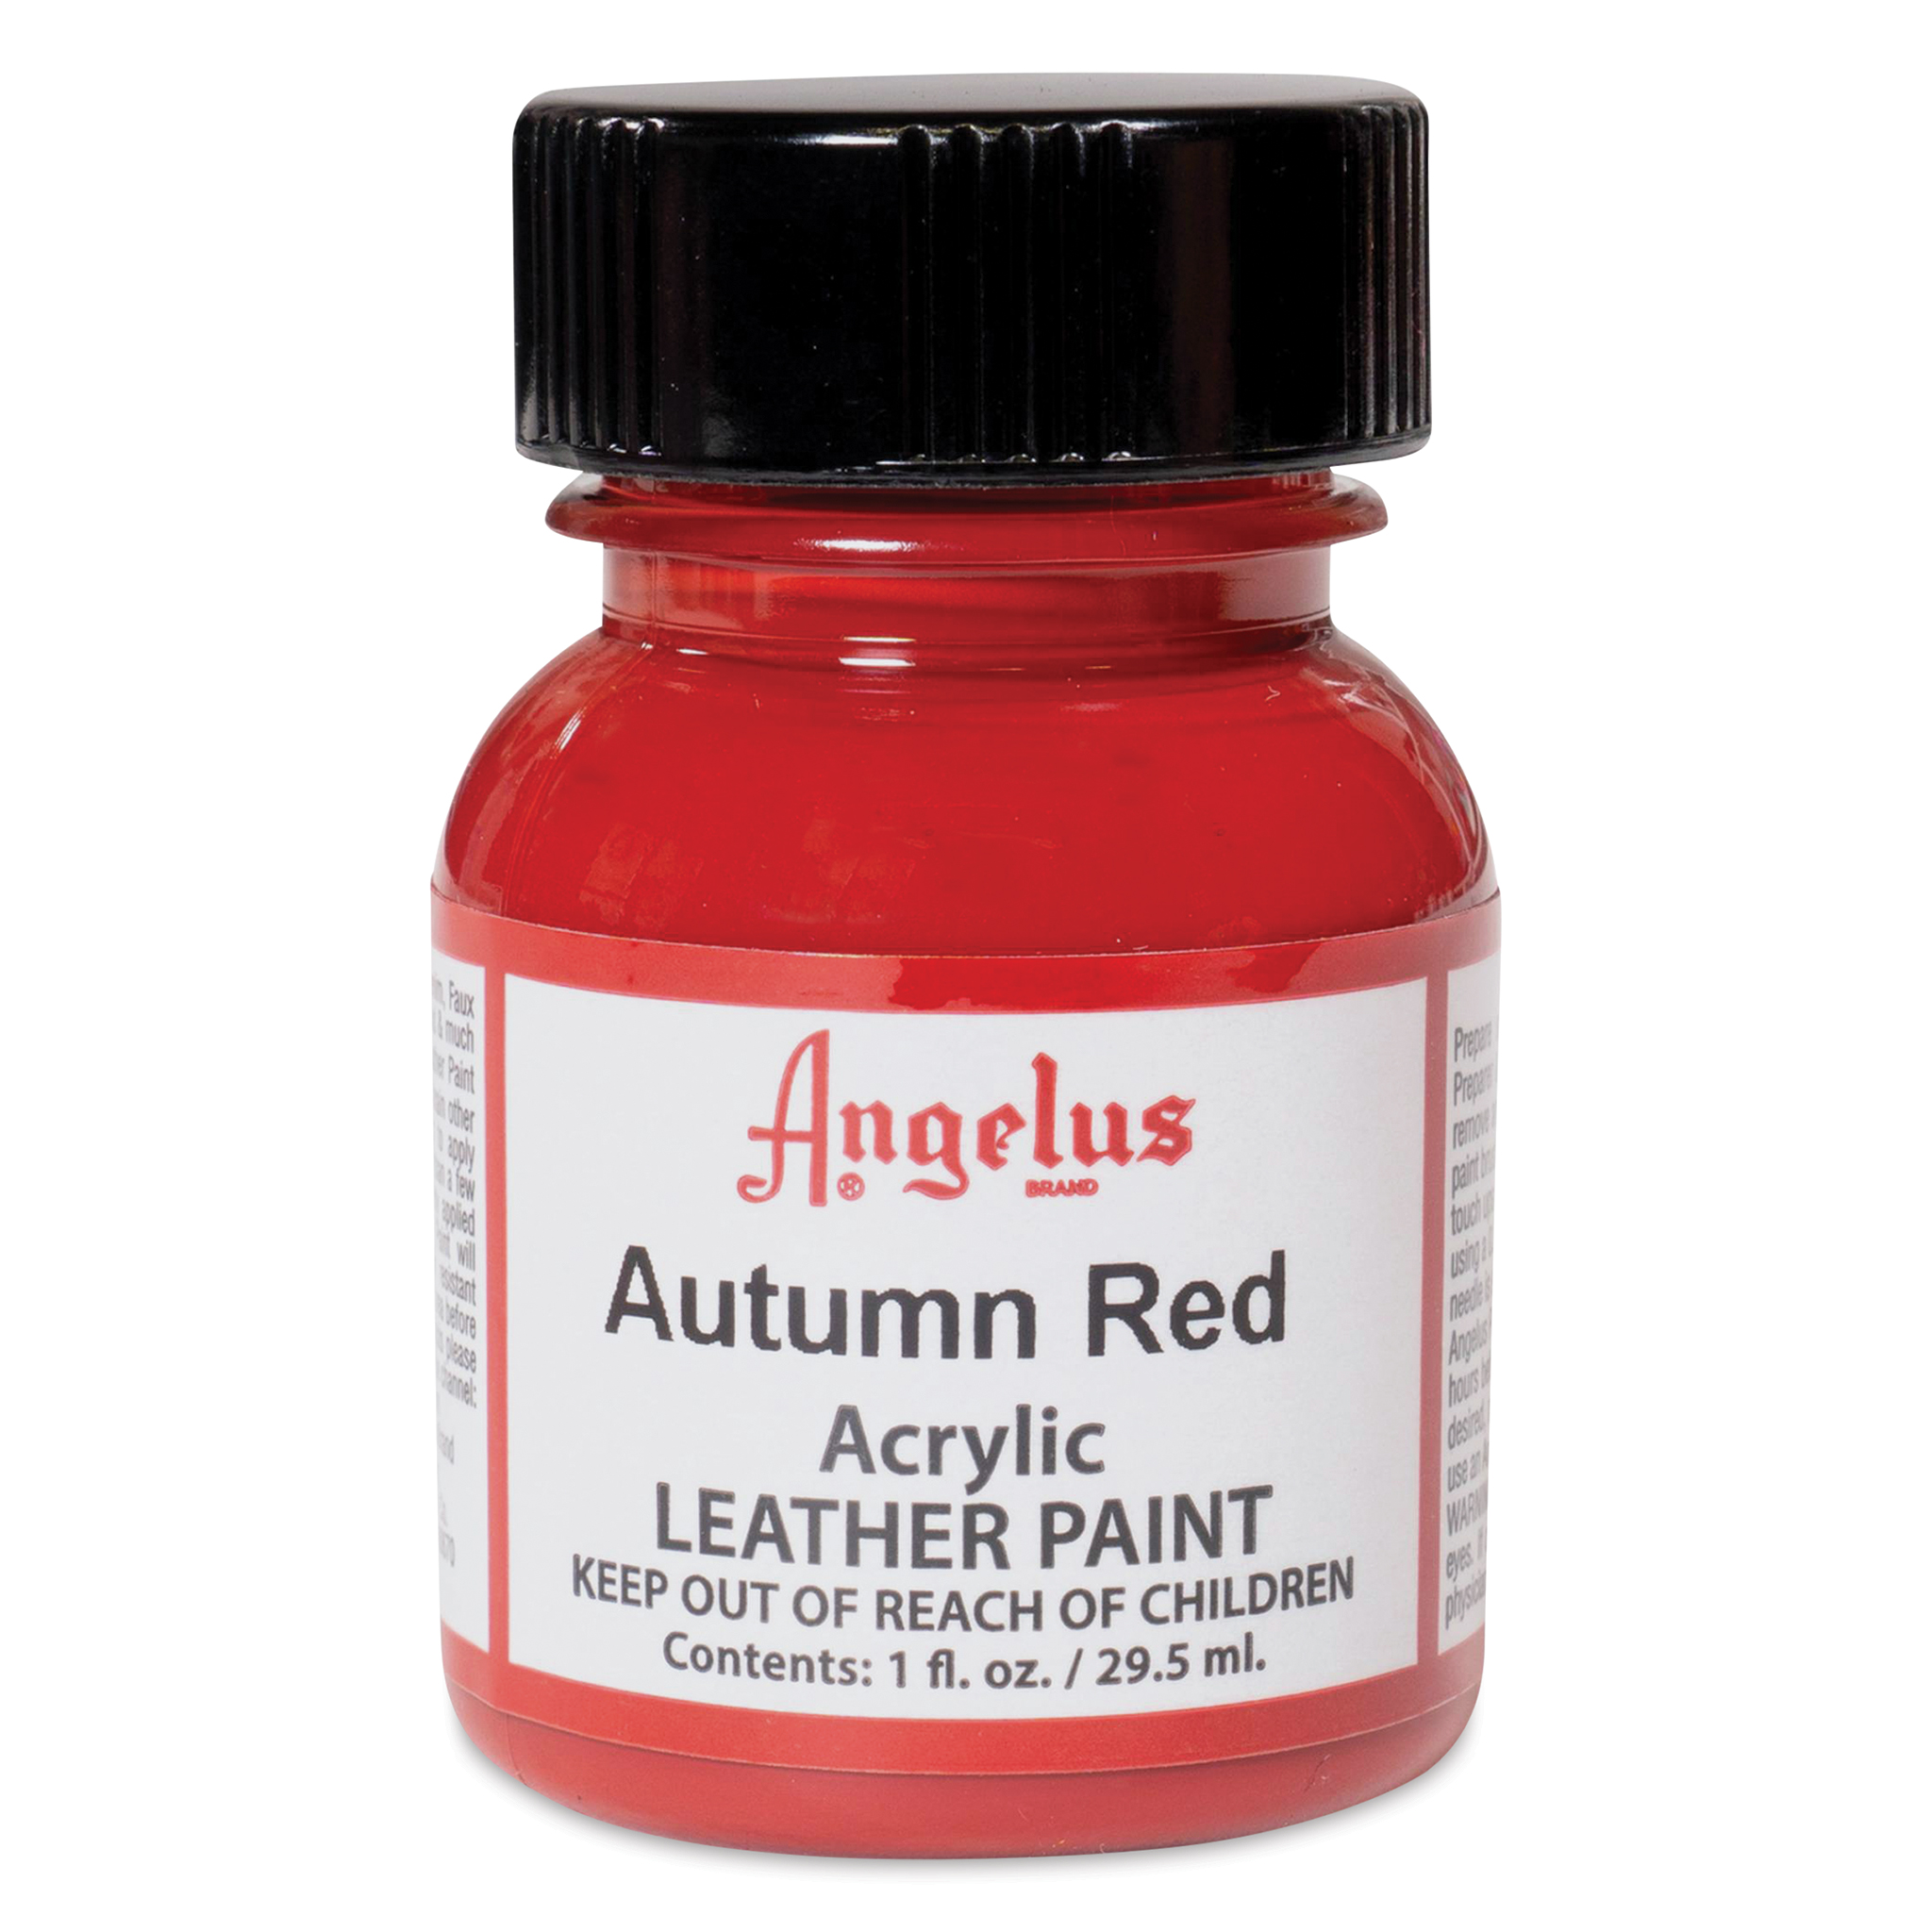 angelus acrylic leather paint autumn red